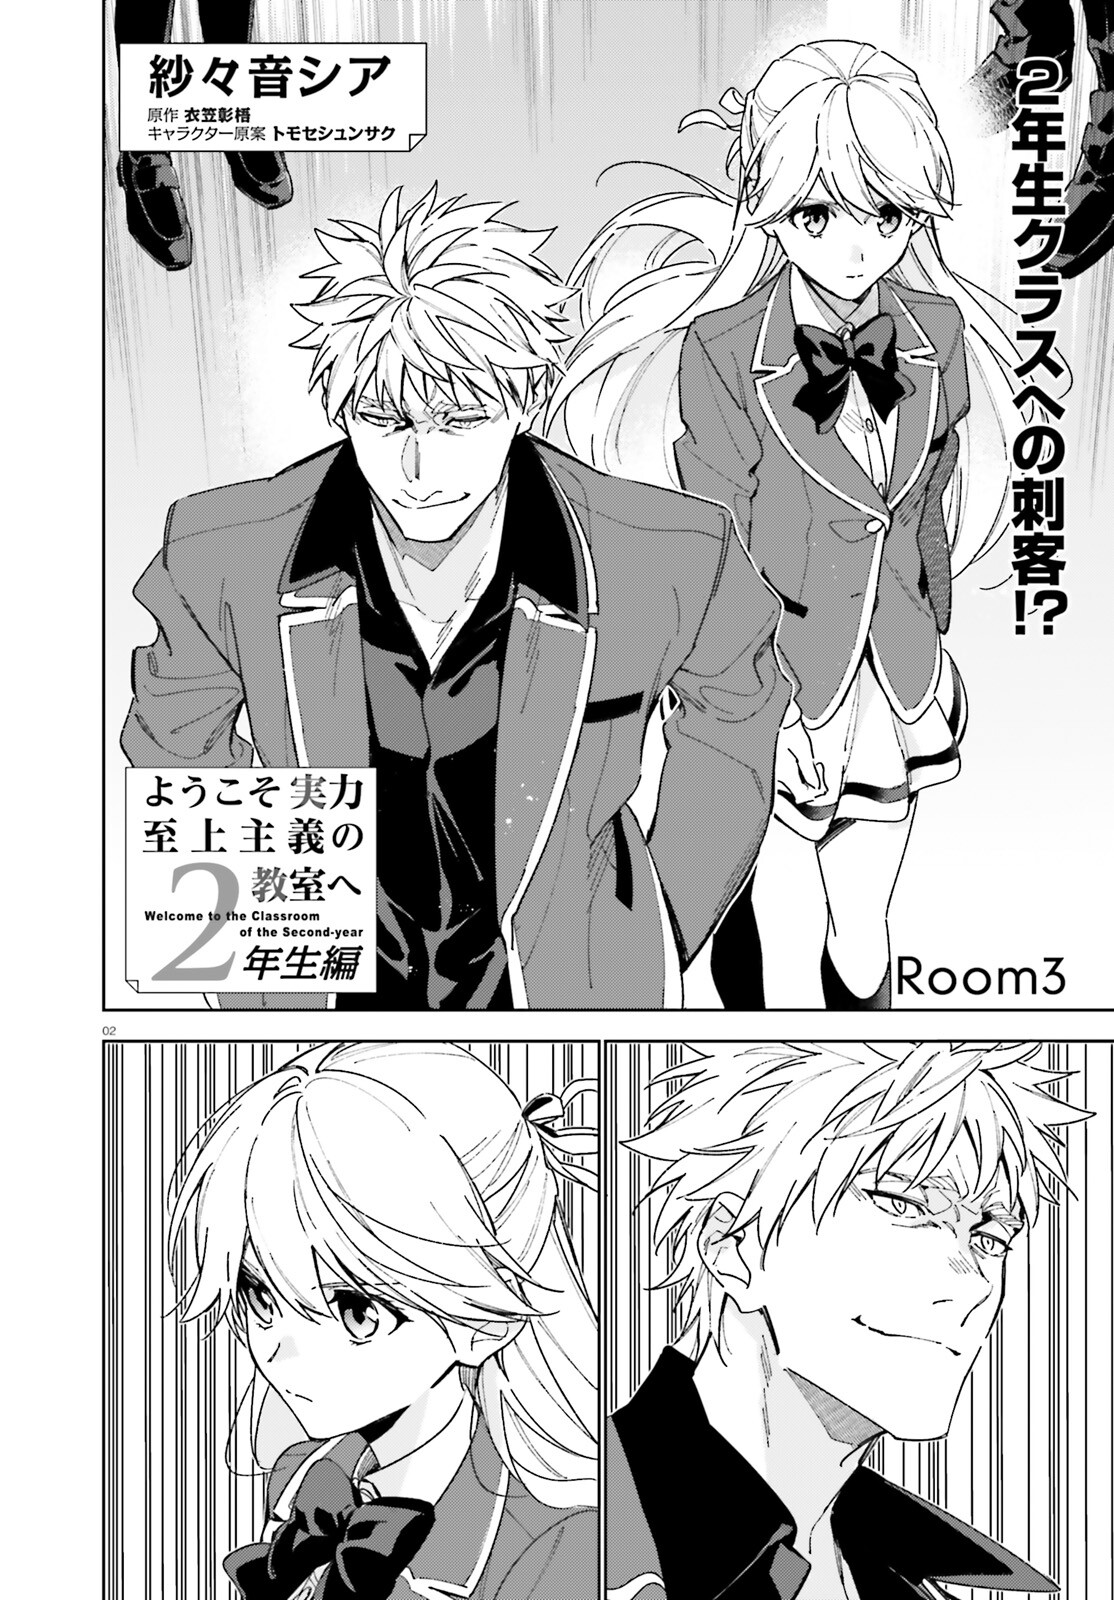 Classroom of the Elite, Chapter 52 - Classroom of the Elite Manga